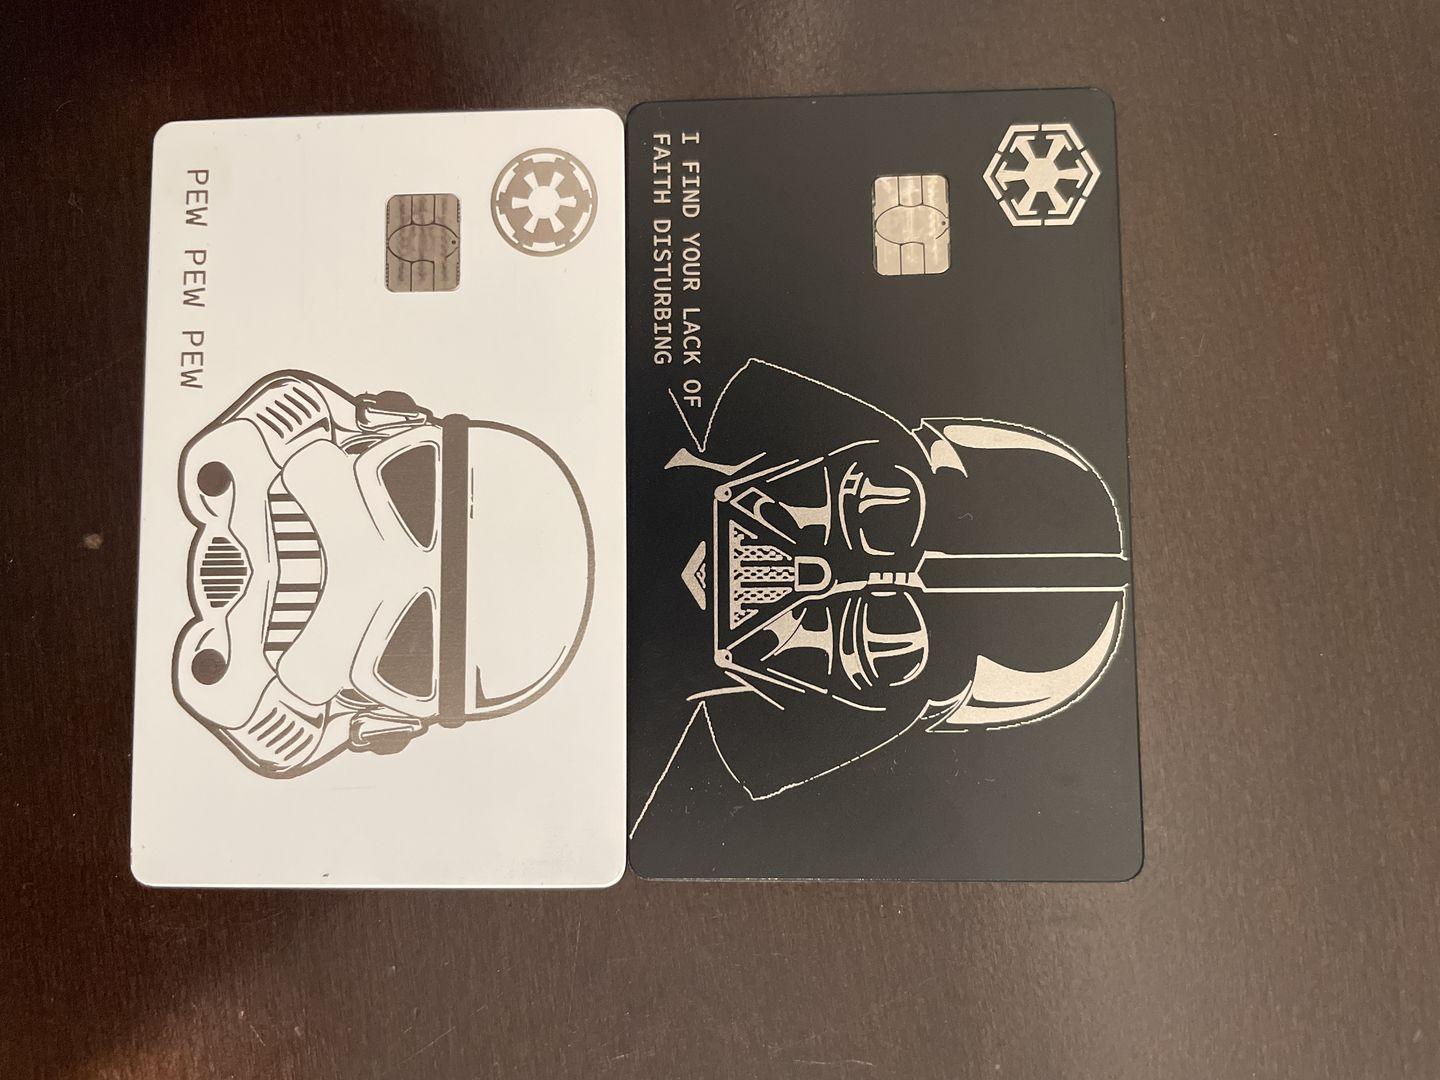 Matt_White_Credit_Cards - Metalcard Printunique